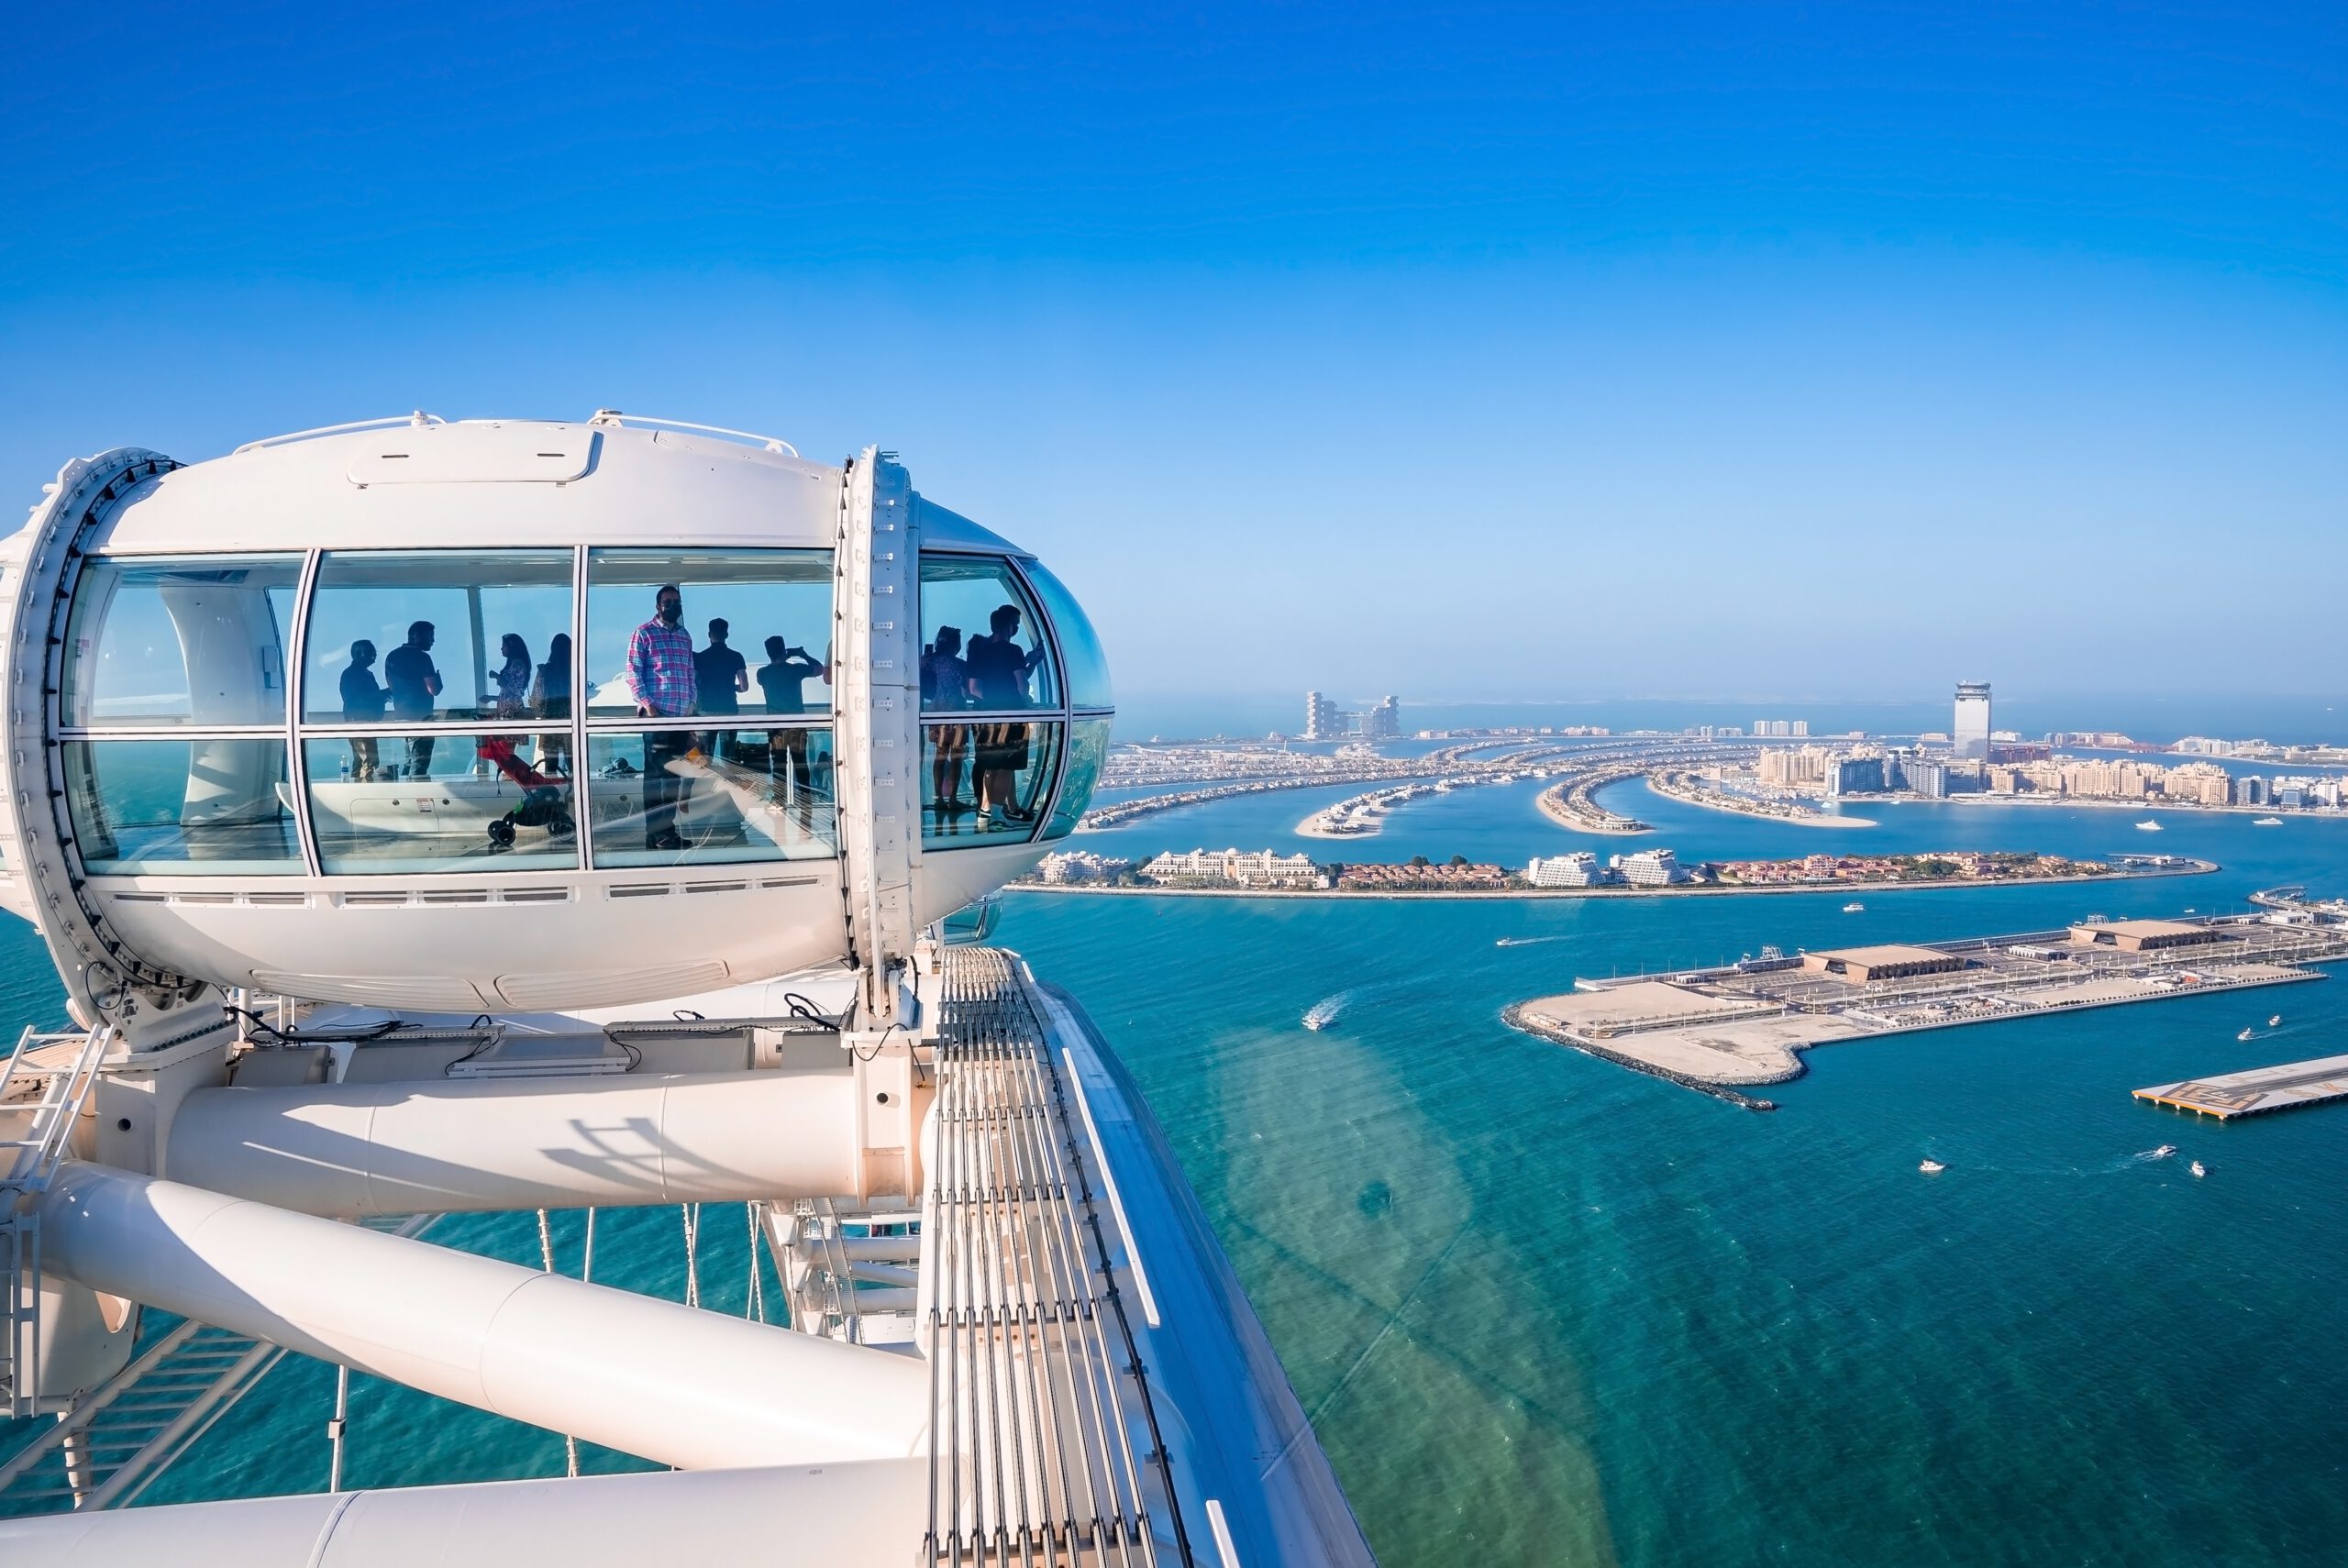 Ain Dubai Ferris Wheel - Cabin